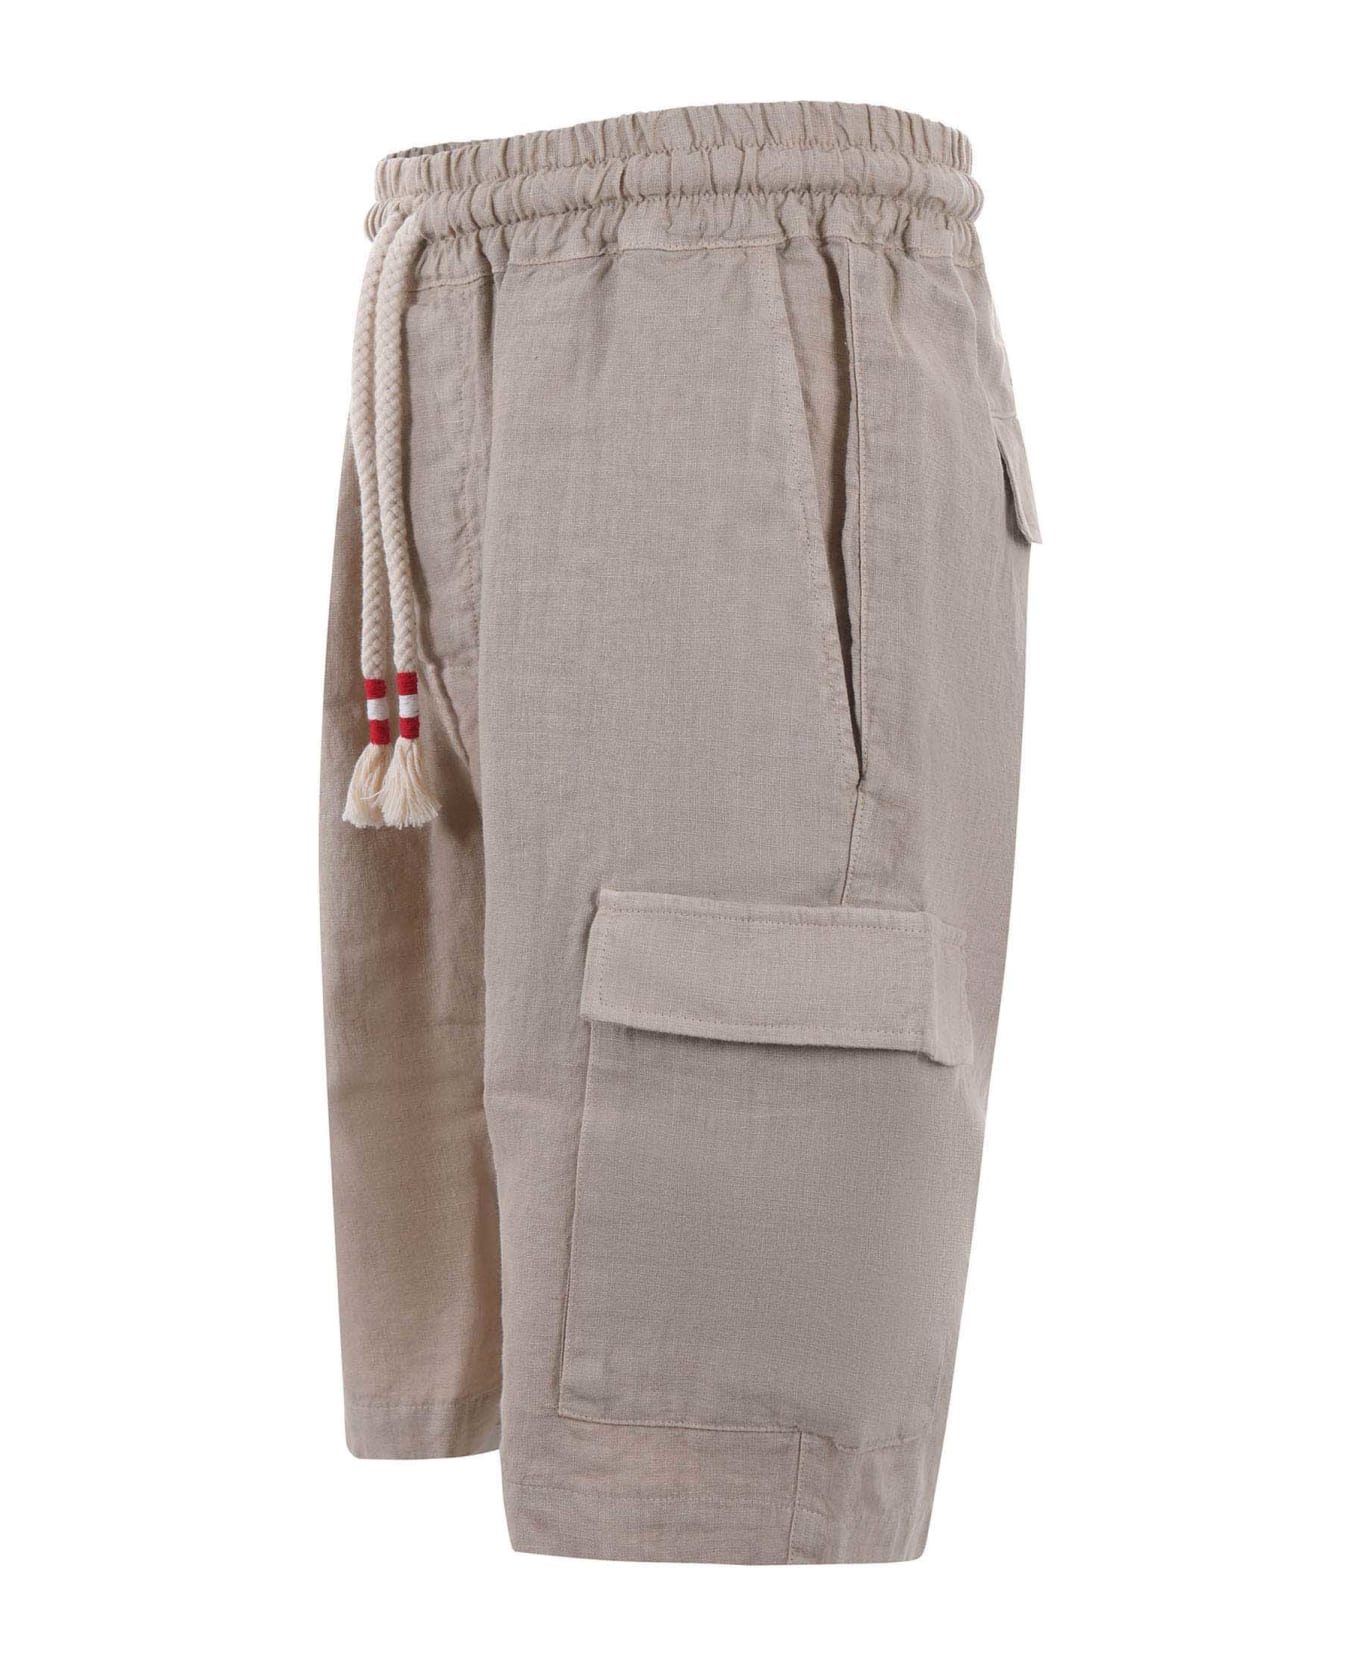 MC2 Saint Barth Linen Shorts - Beige